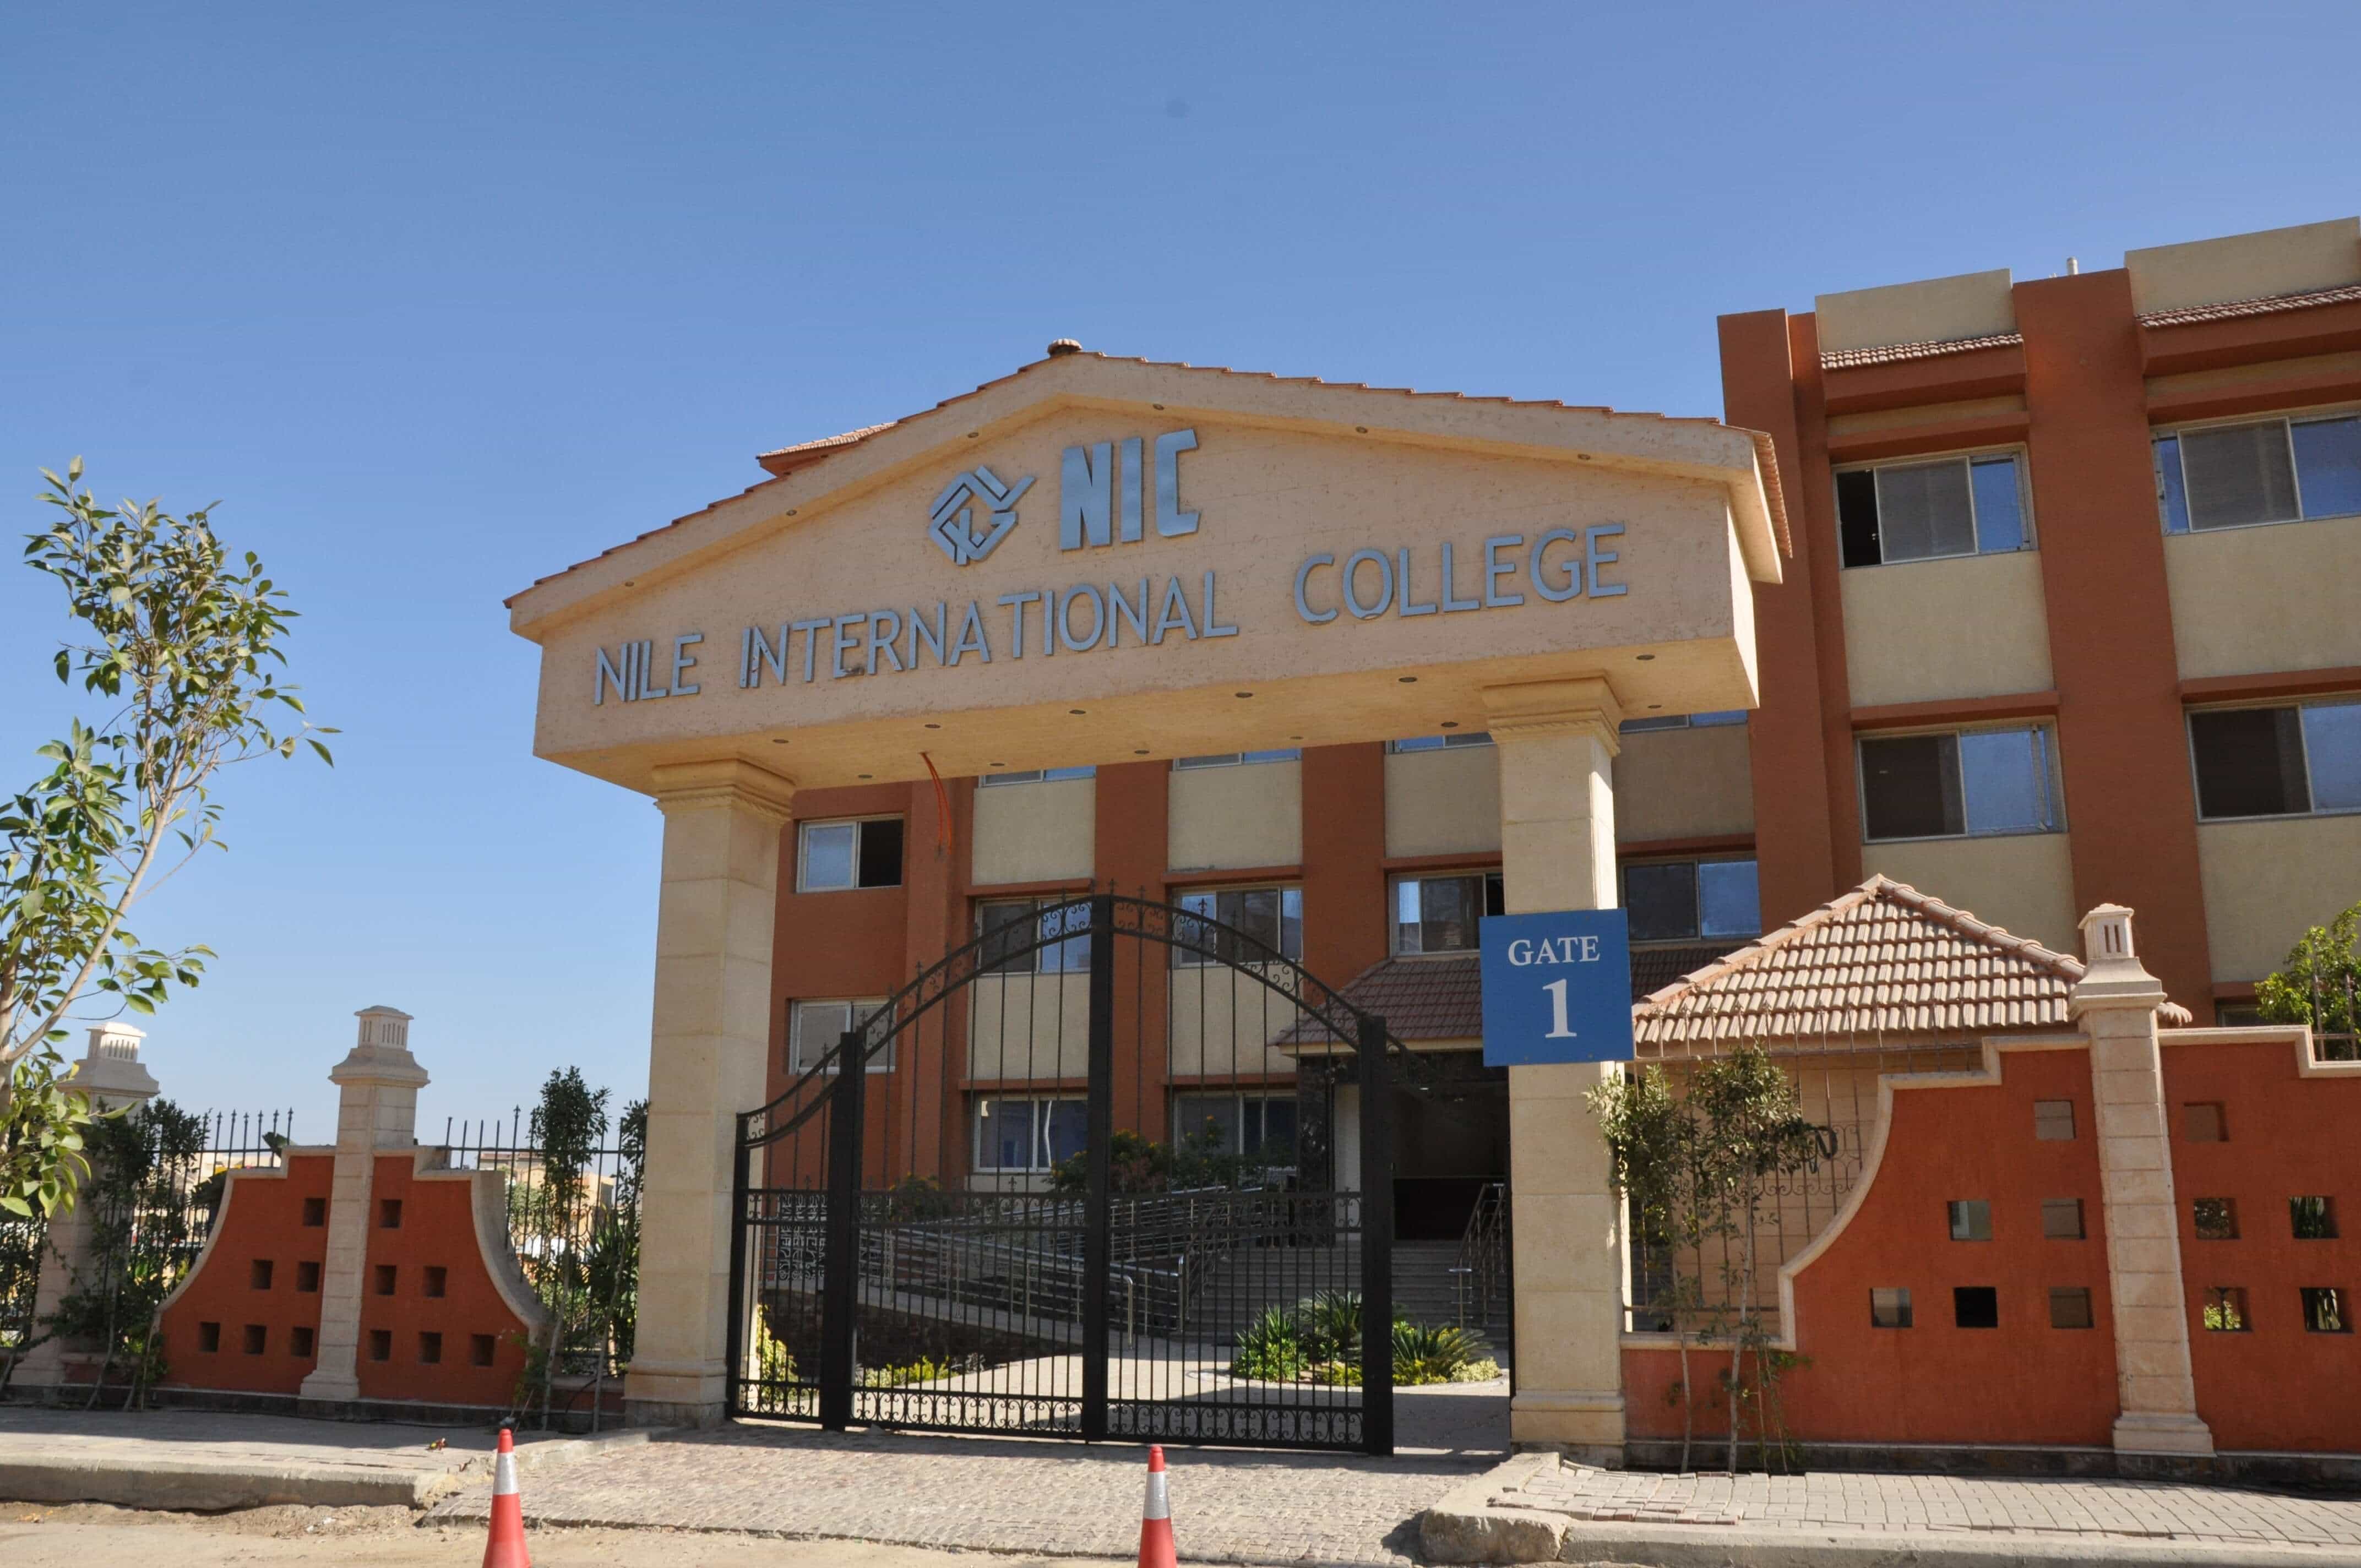 Nile International College Building